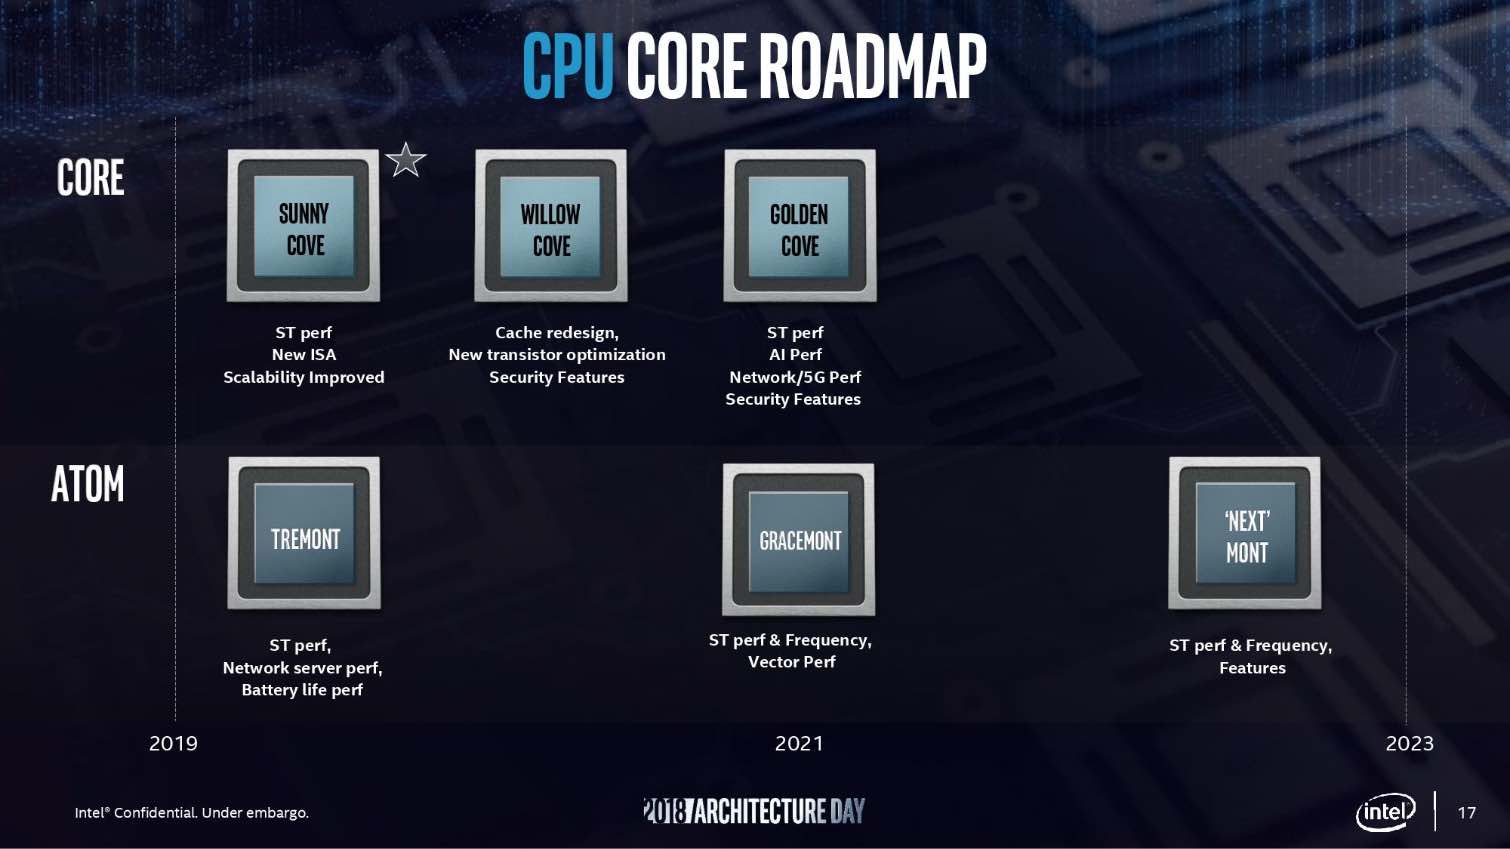 Intel CPU roadmap 2019-2023